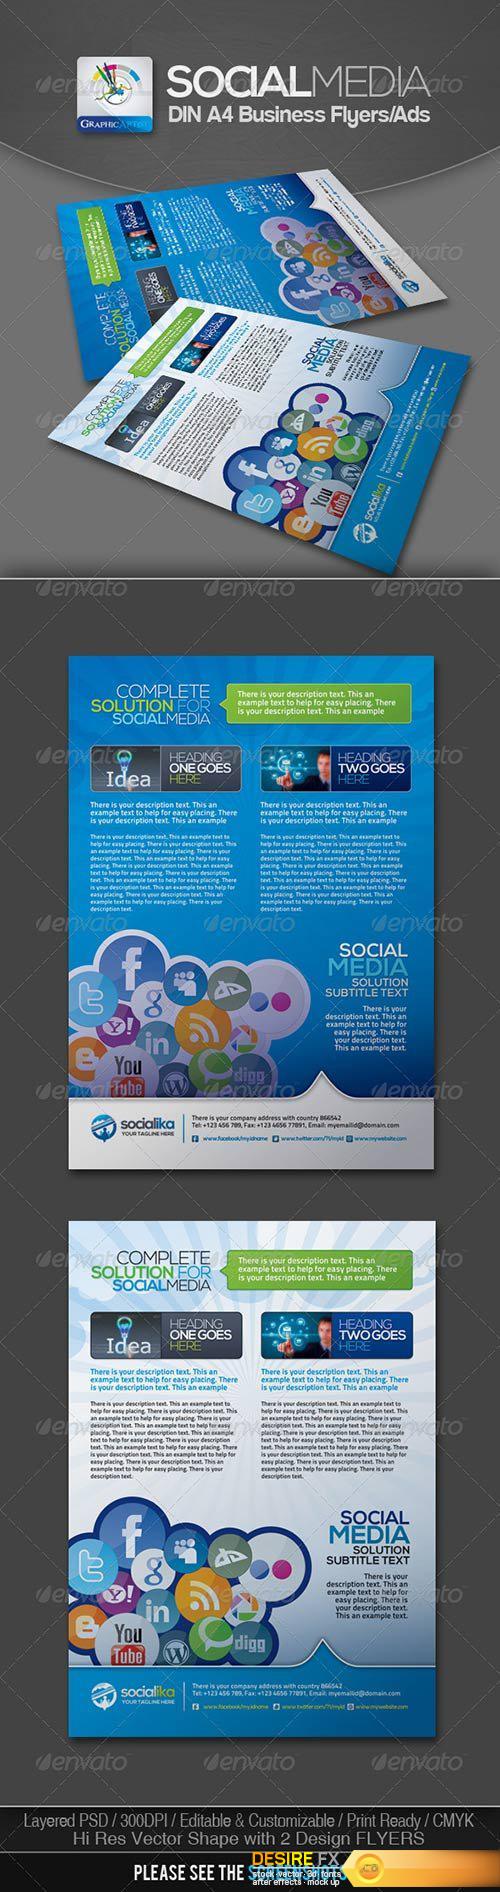 Graphicriver - Social Media Business Flyers v.2 3023822